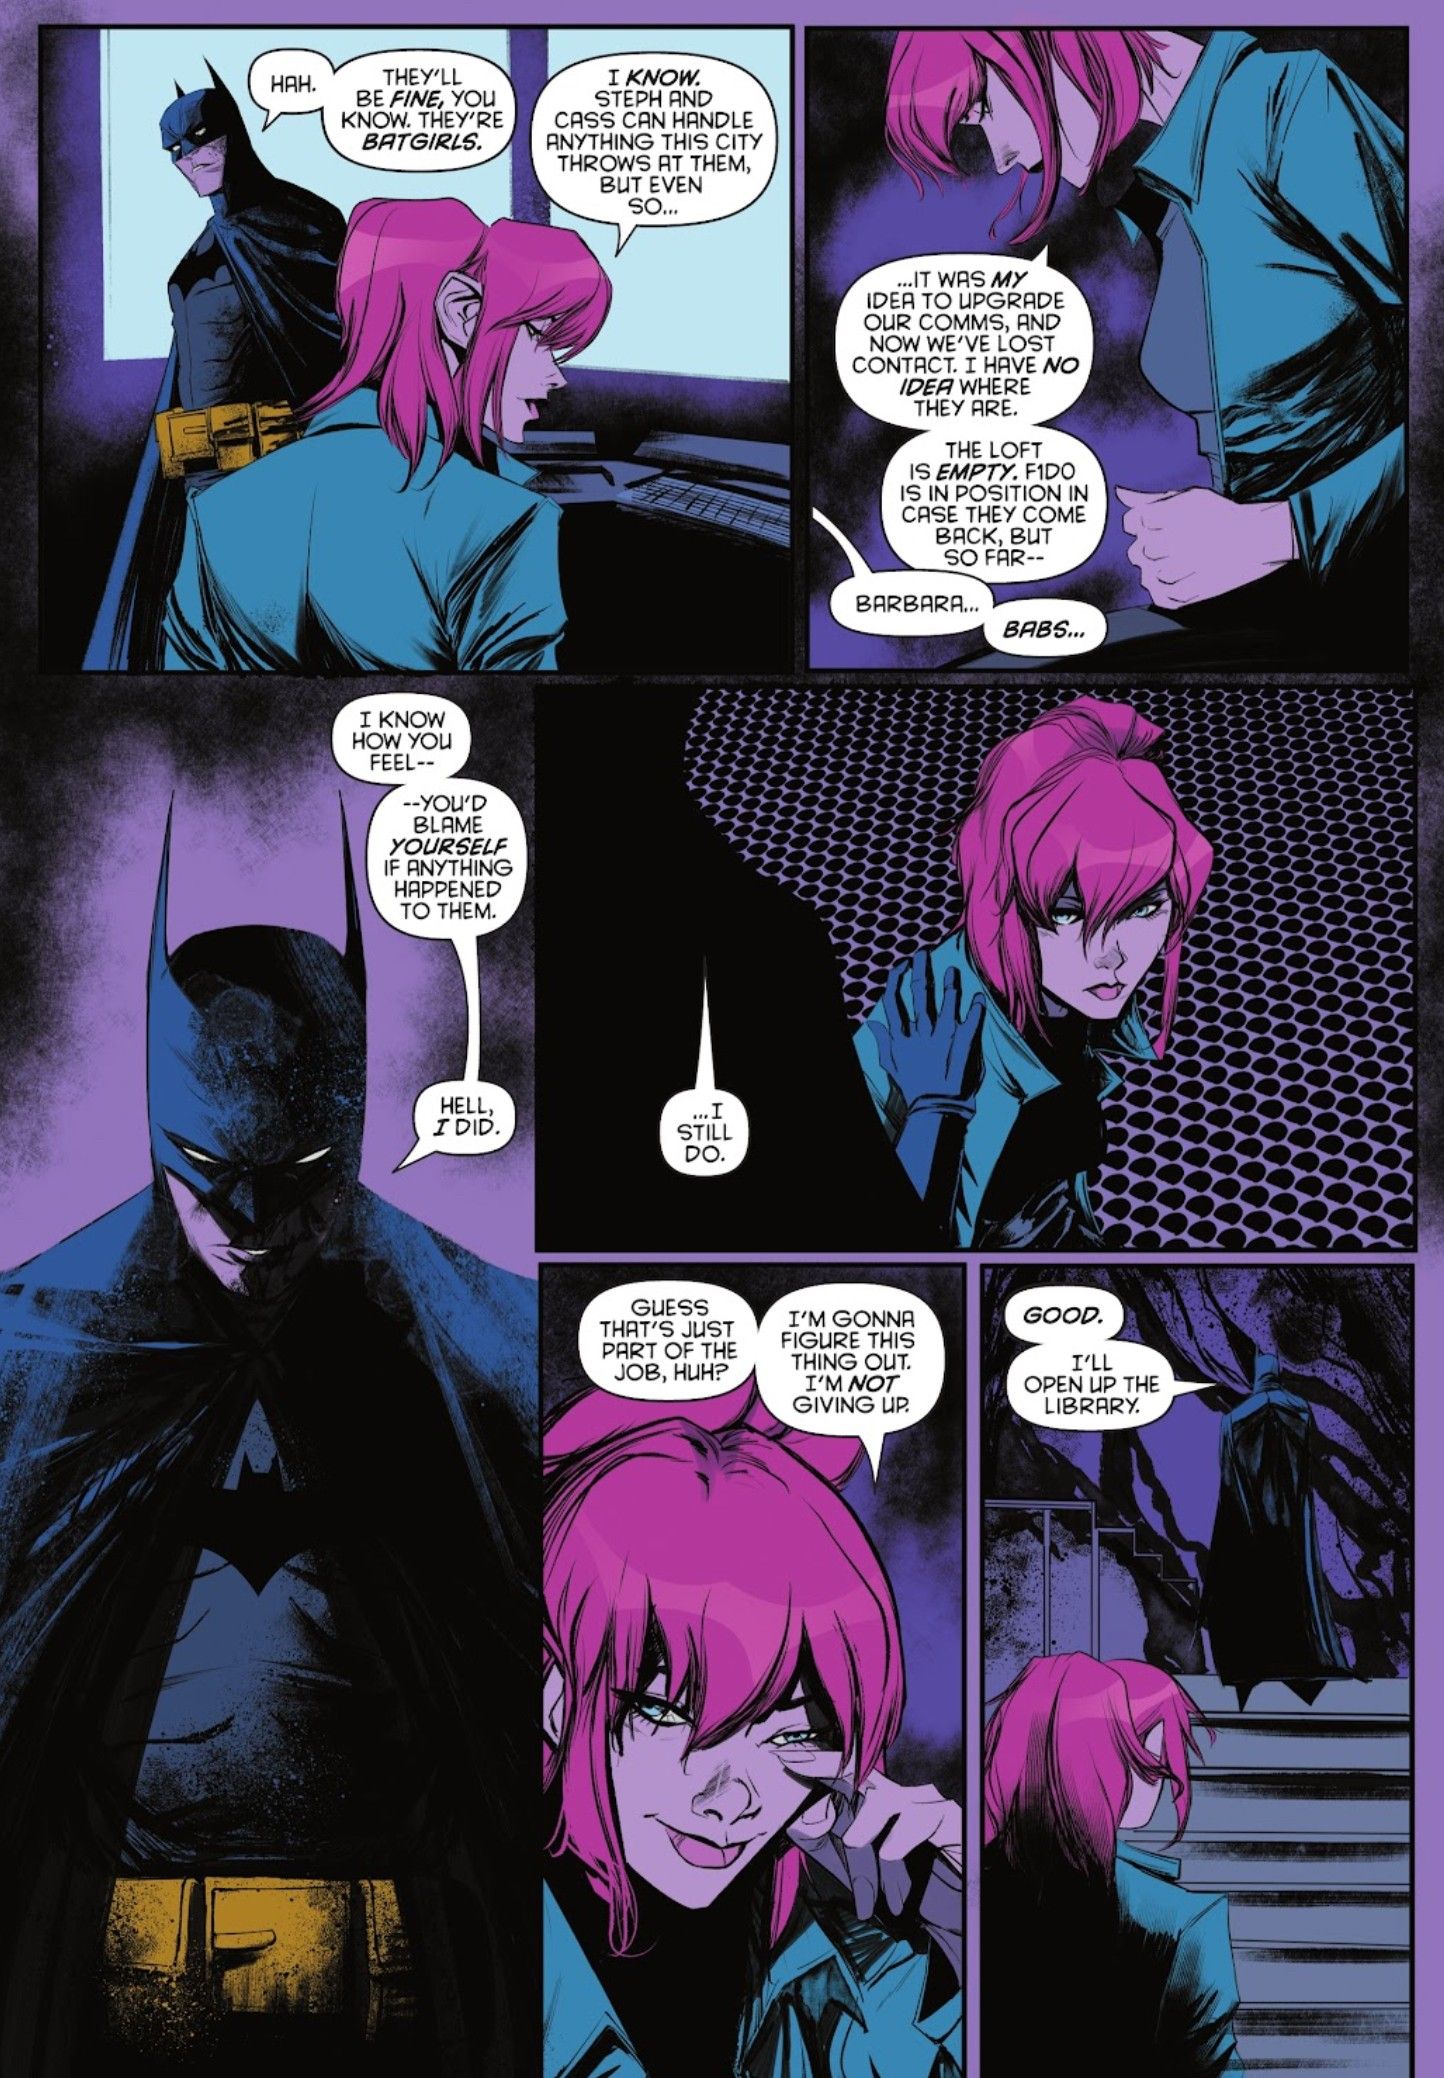 Batman Talks to Barbara Gordon about the Batgirl Legacy